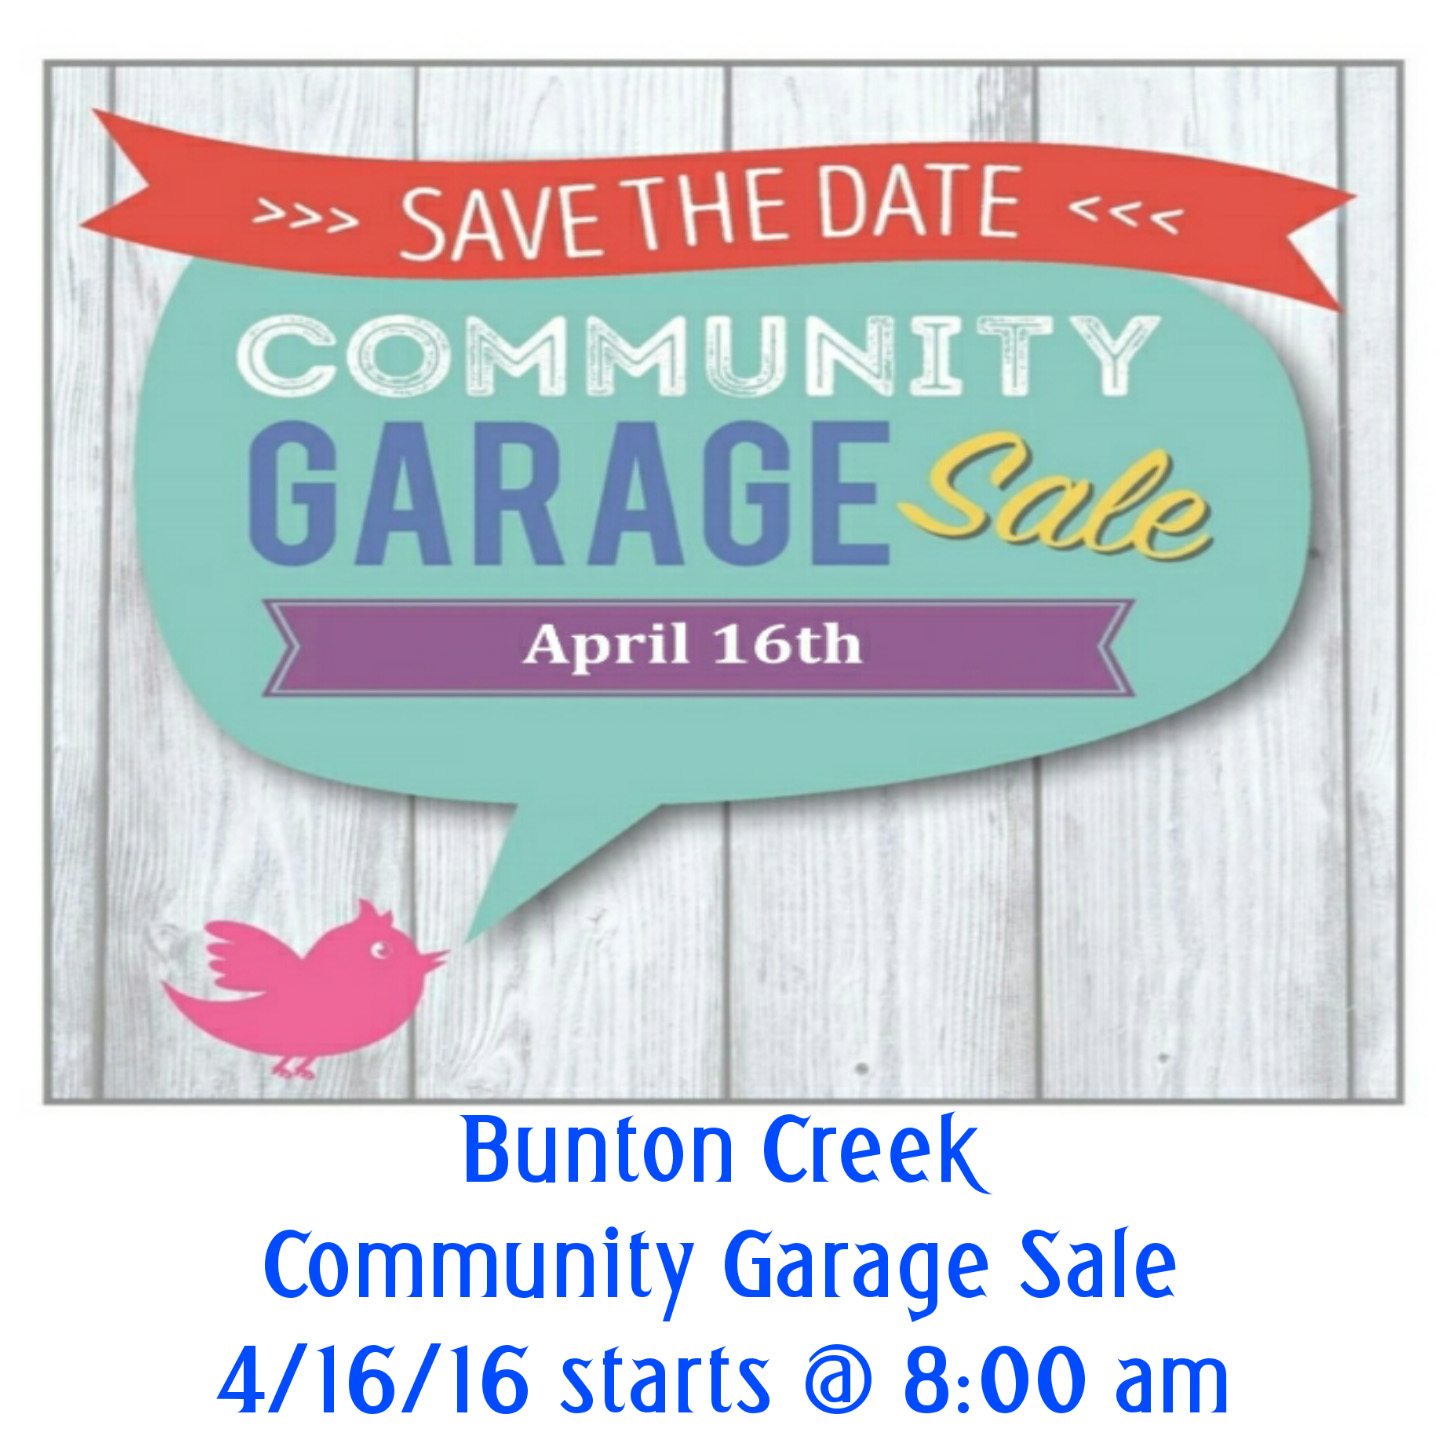 Bunton Creek Community Garage Sale!